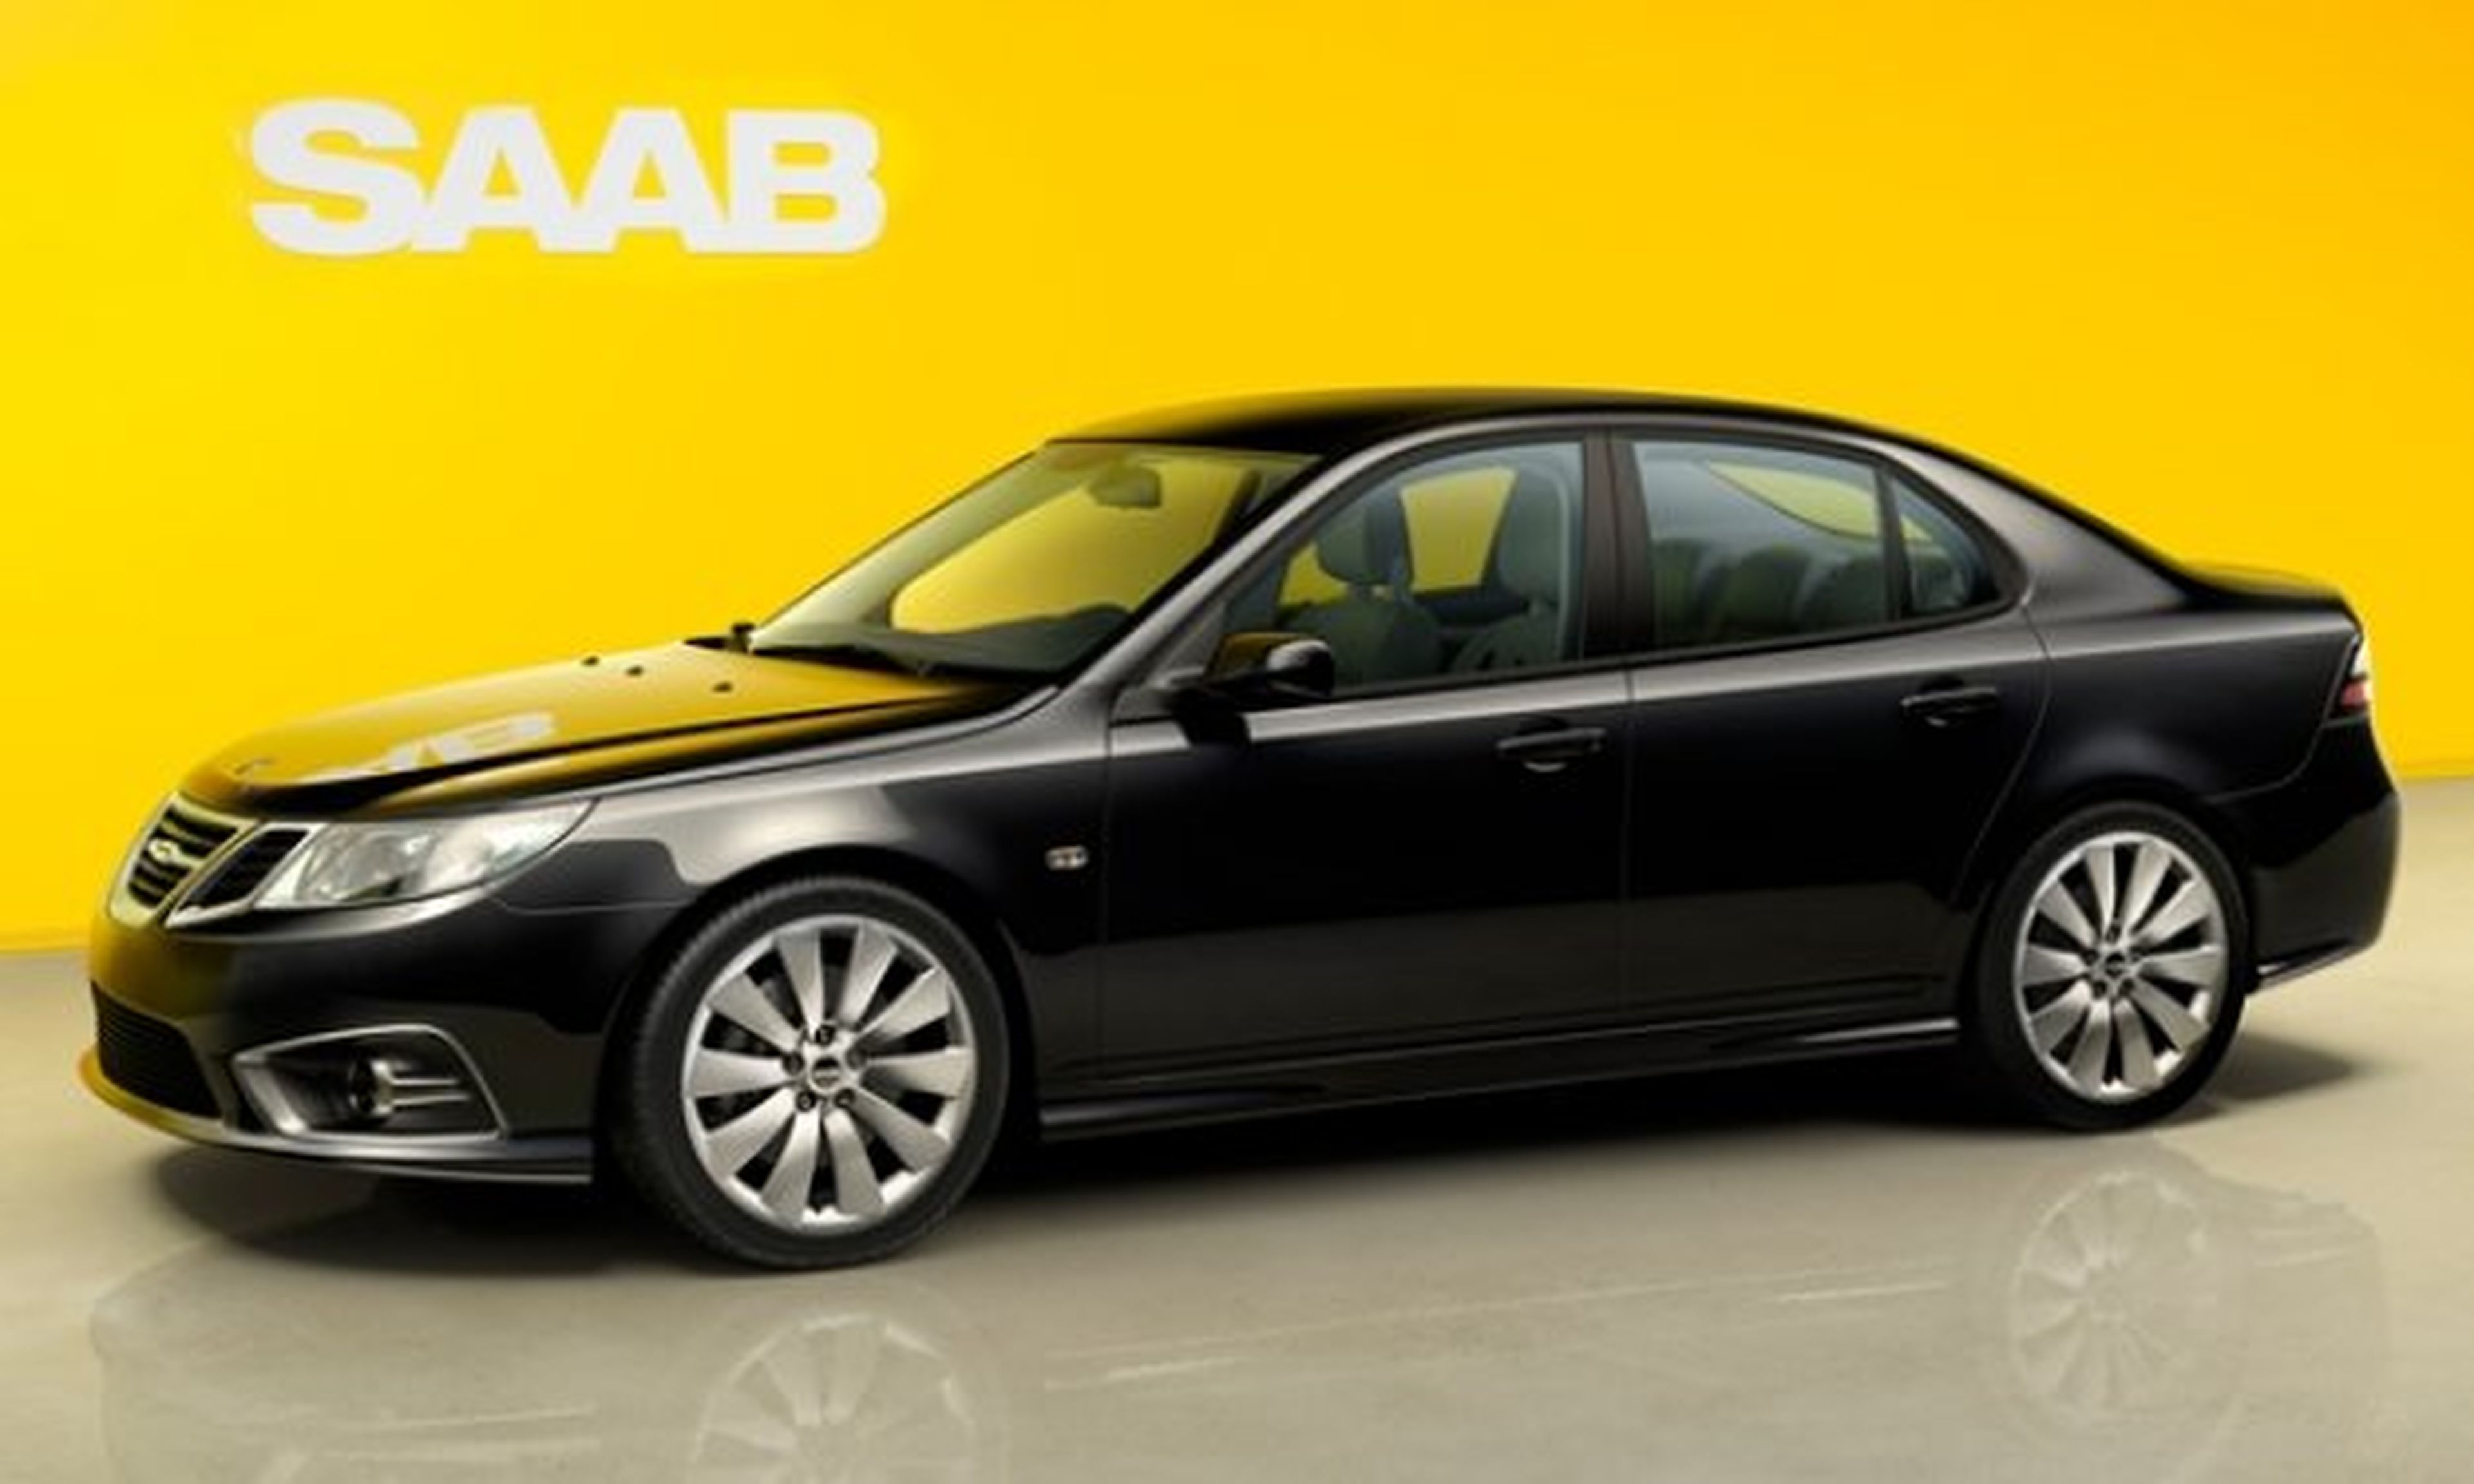 Saab desarrolla el Saab 9-3 sedan y la plataforma Phoenix